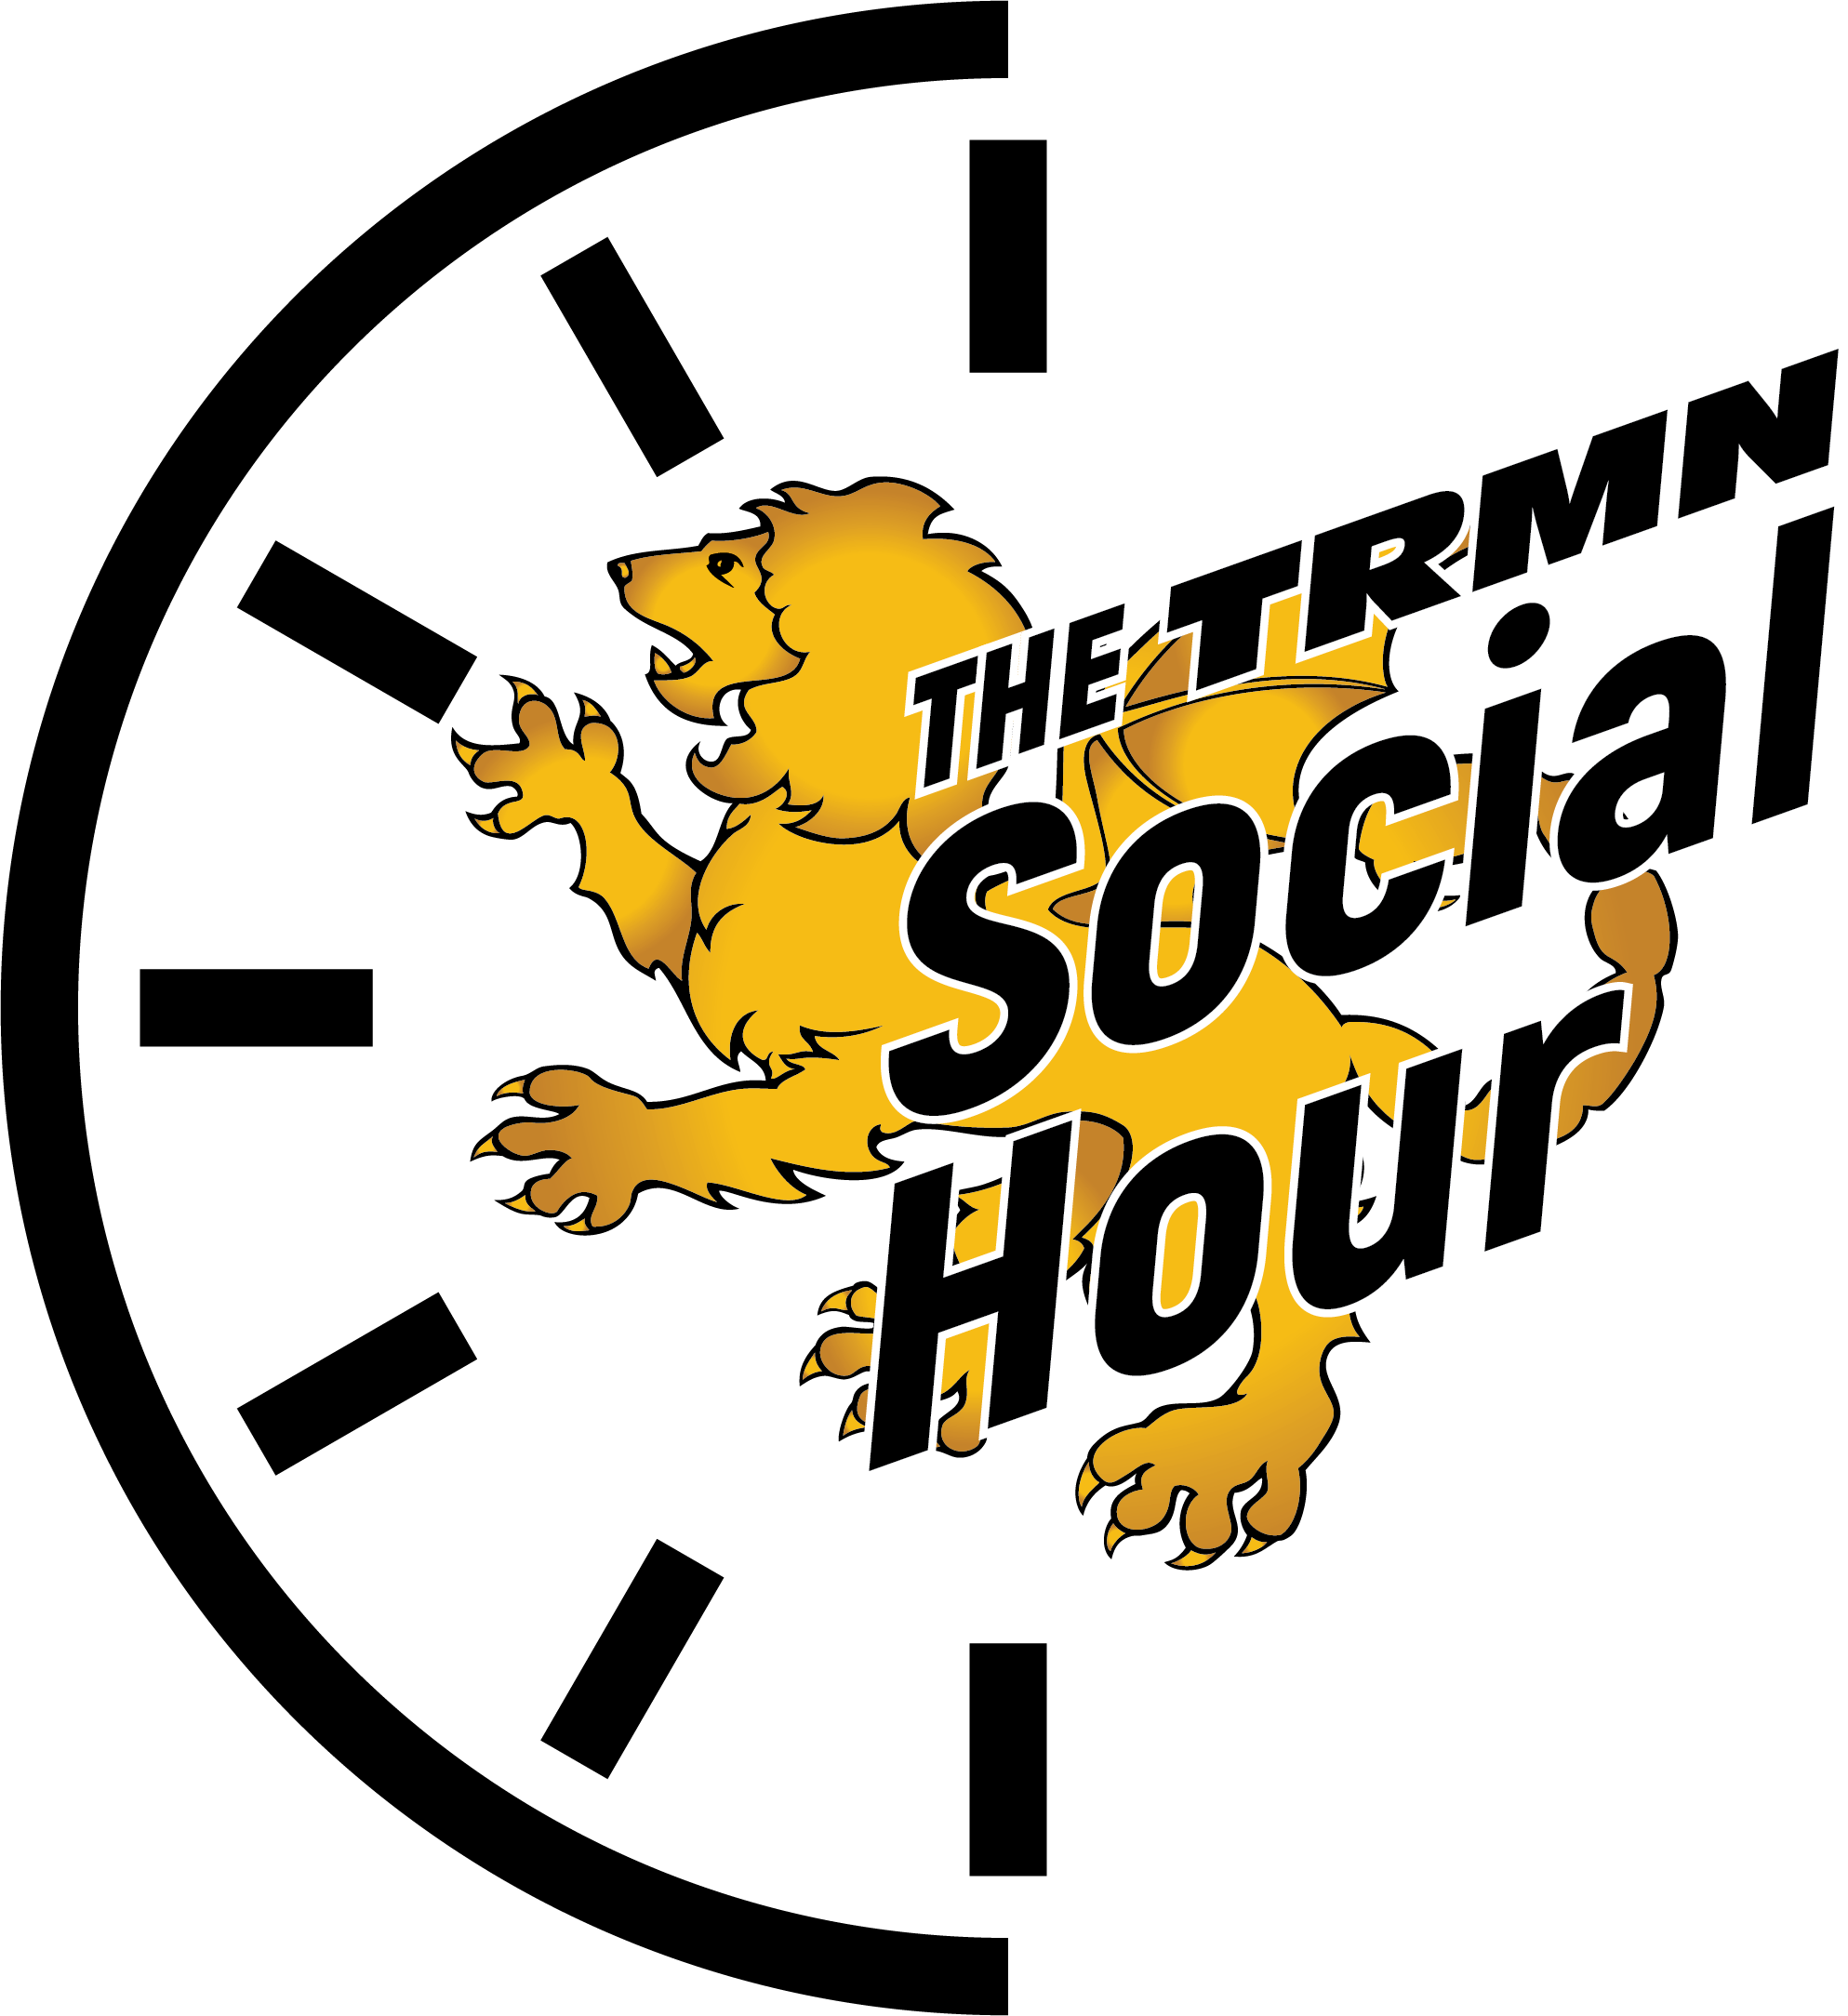 TRMN Social Hour